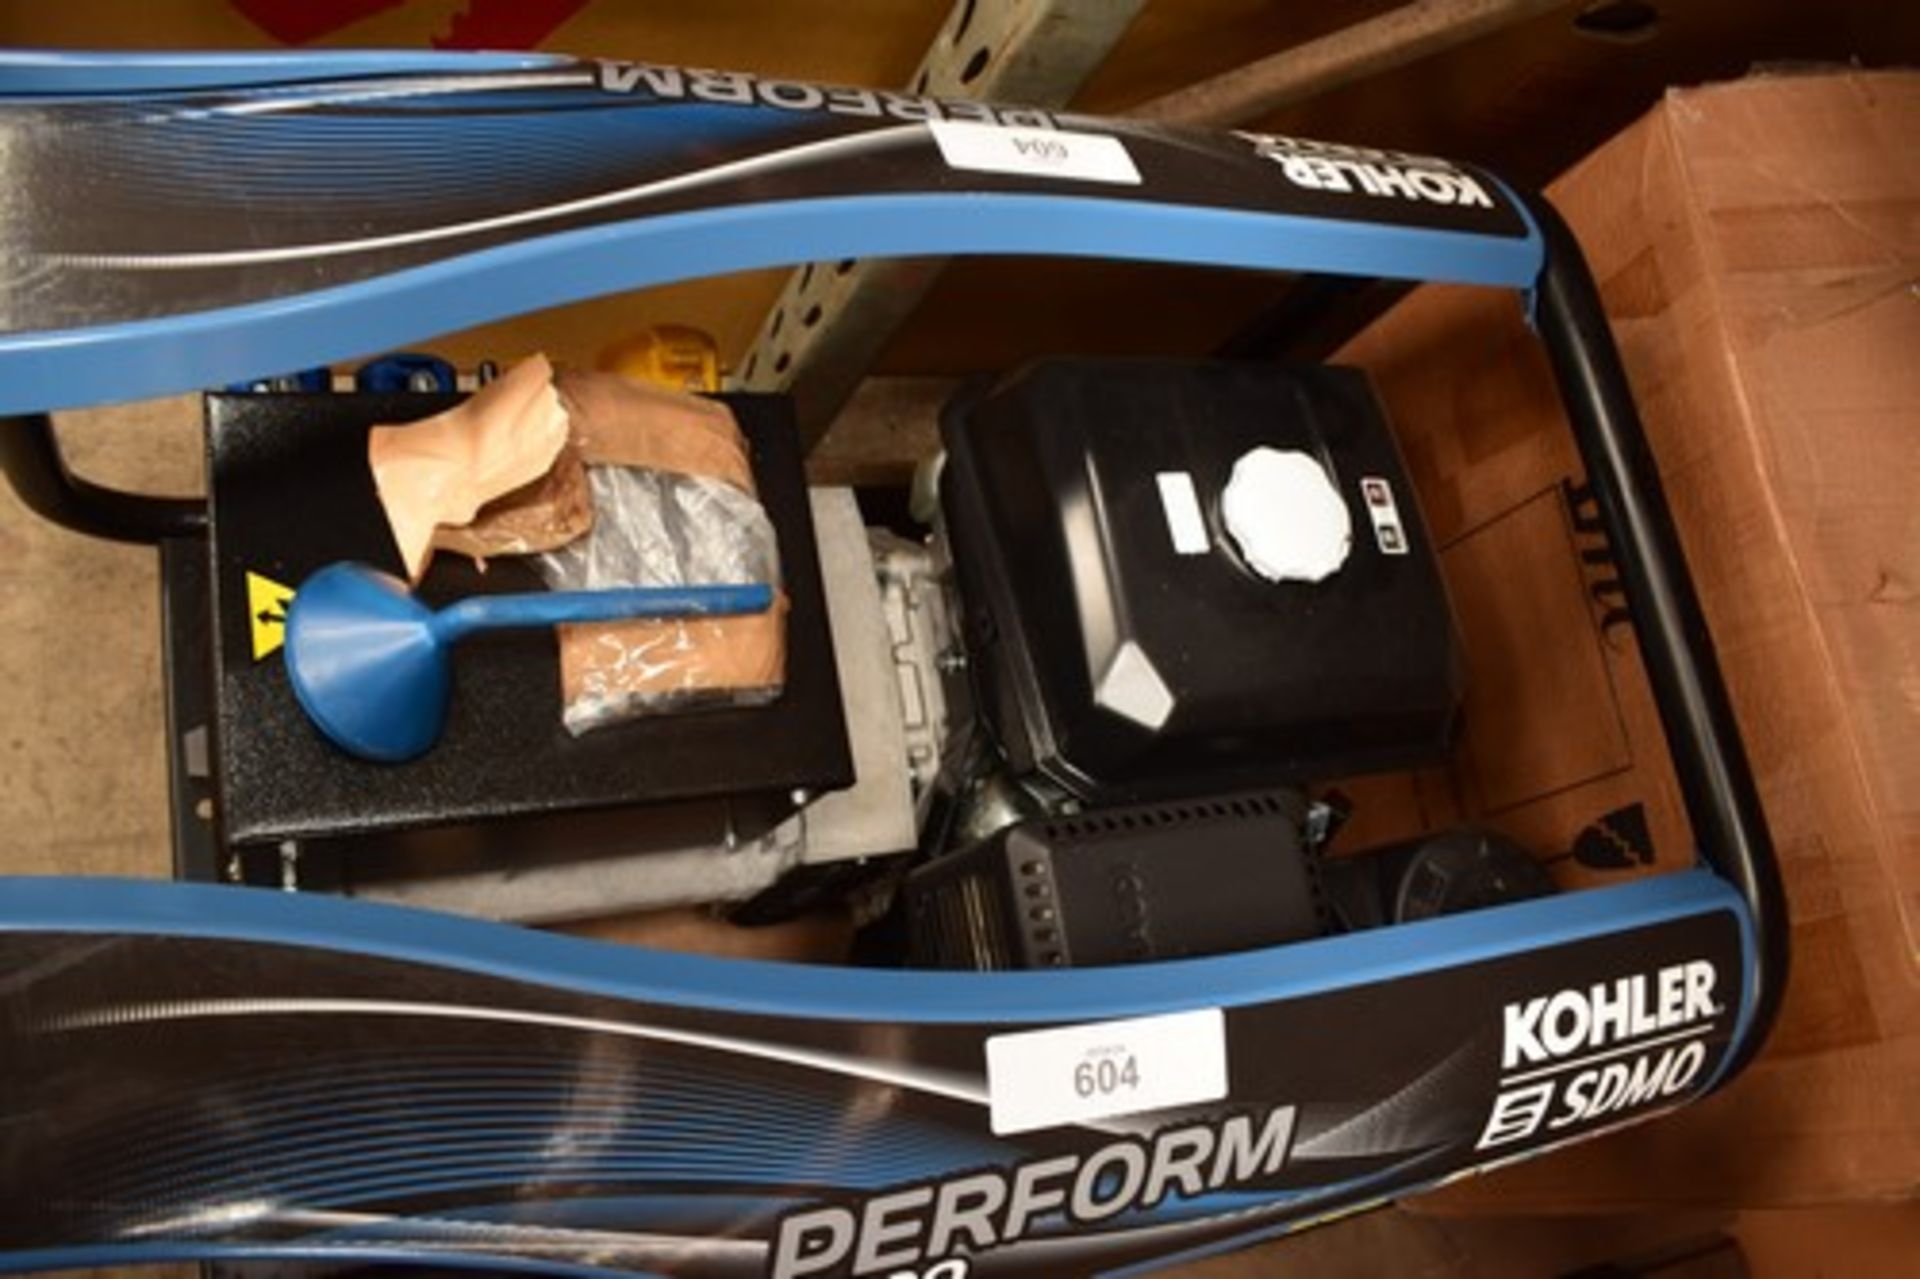 1 x Kohler SDMO Perfom 6500 portable generator, fitted with Kohler Command Pro petrol engine, 14HP, - Image 2 of 5